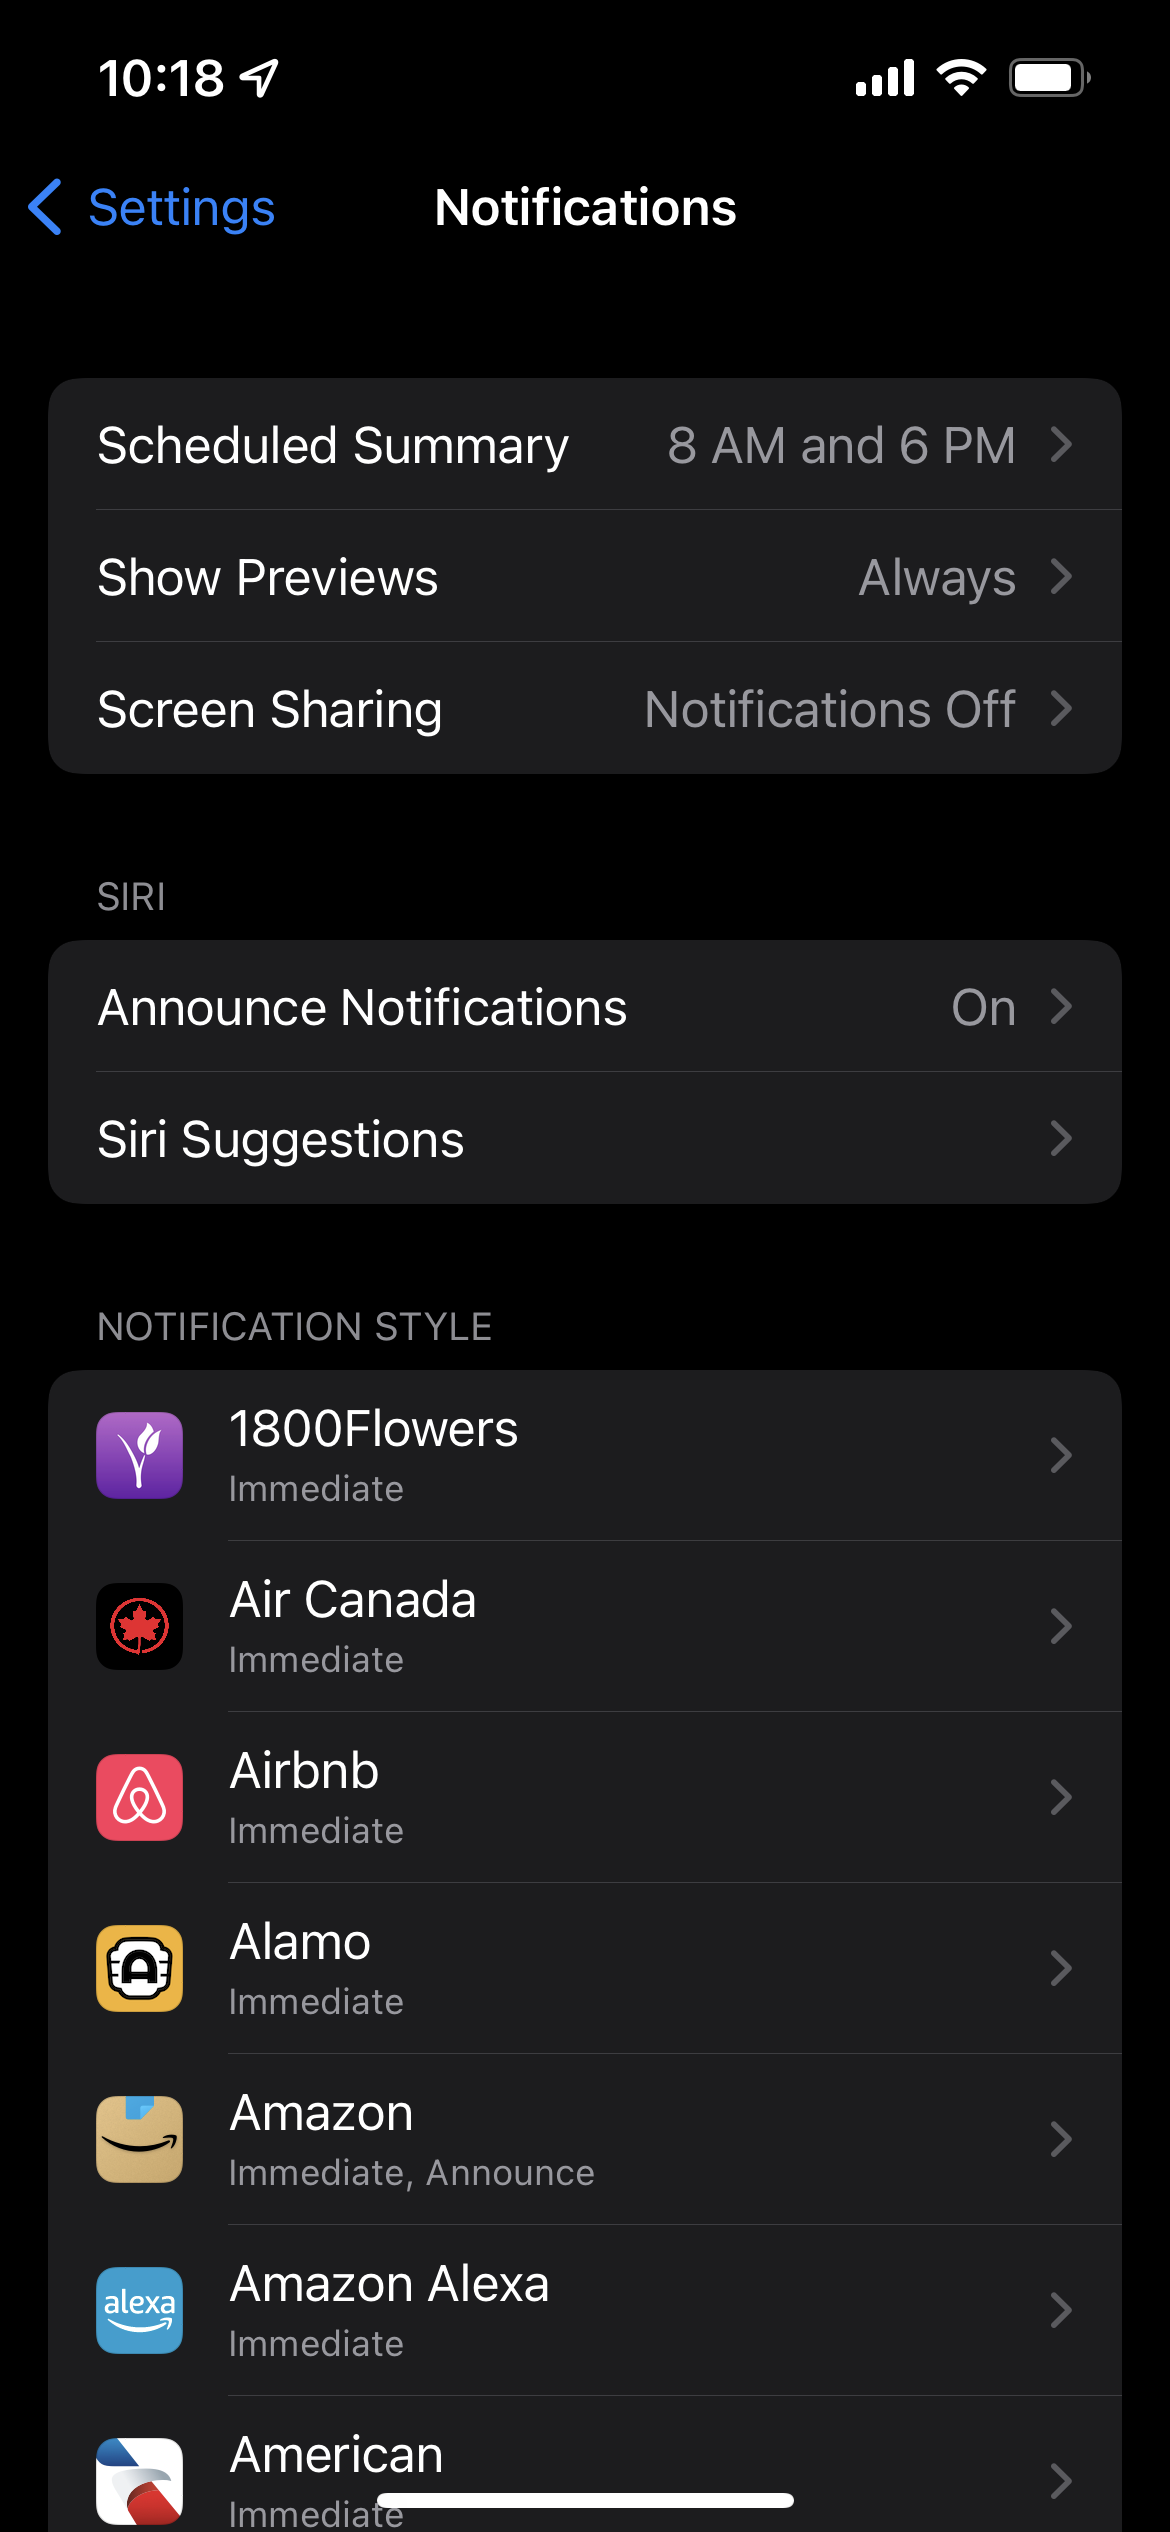 The Notifications menu in the iPhone Settings app